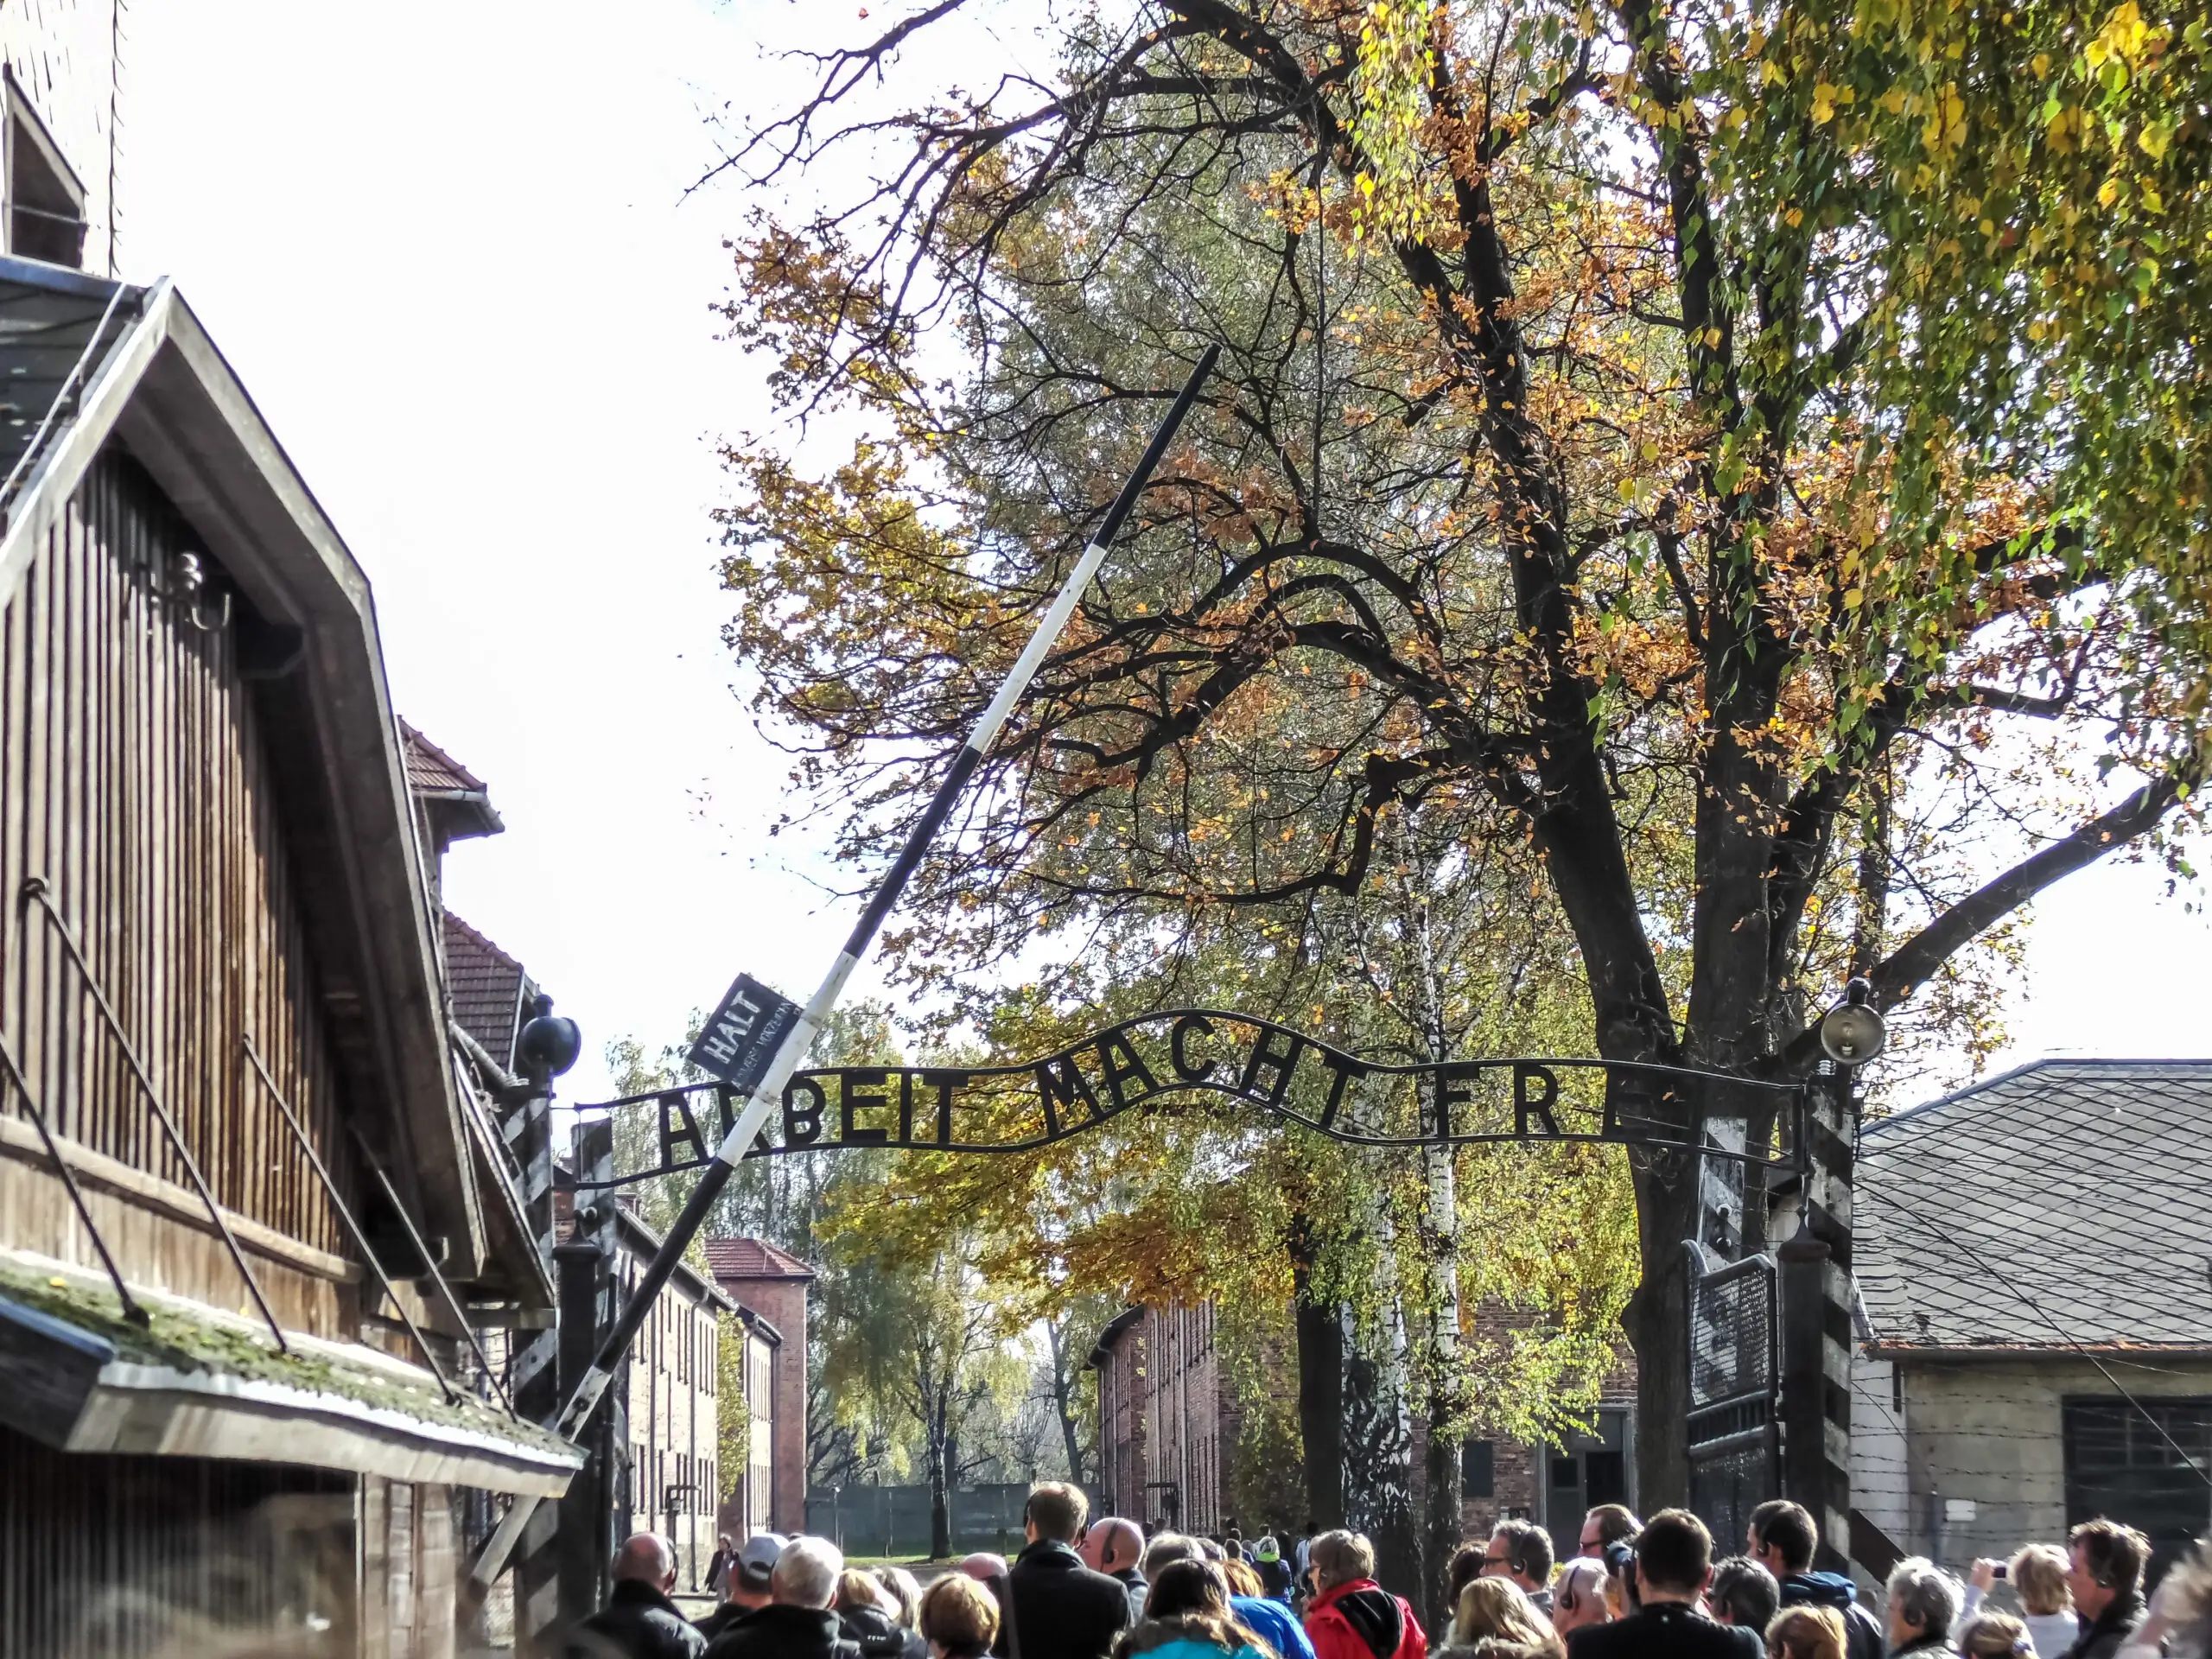  Auschwitz entrance gate with tourists; Courtesy Thomas Ortega/Shutterstock